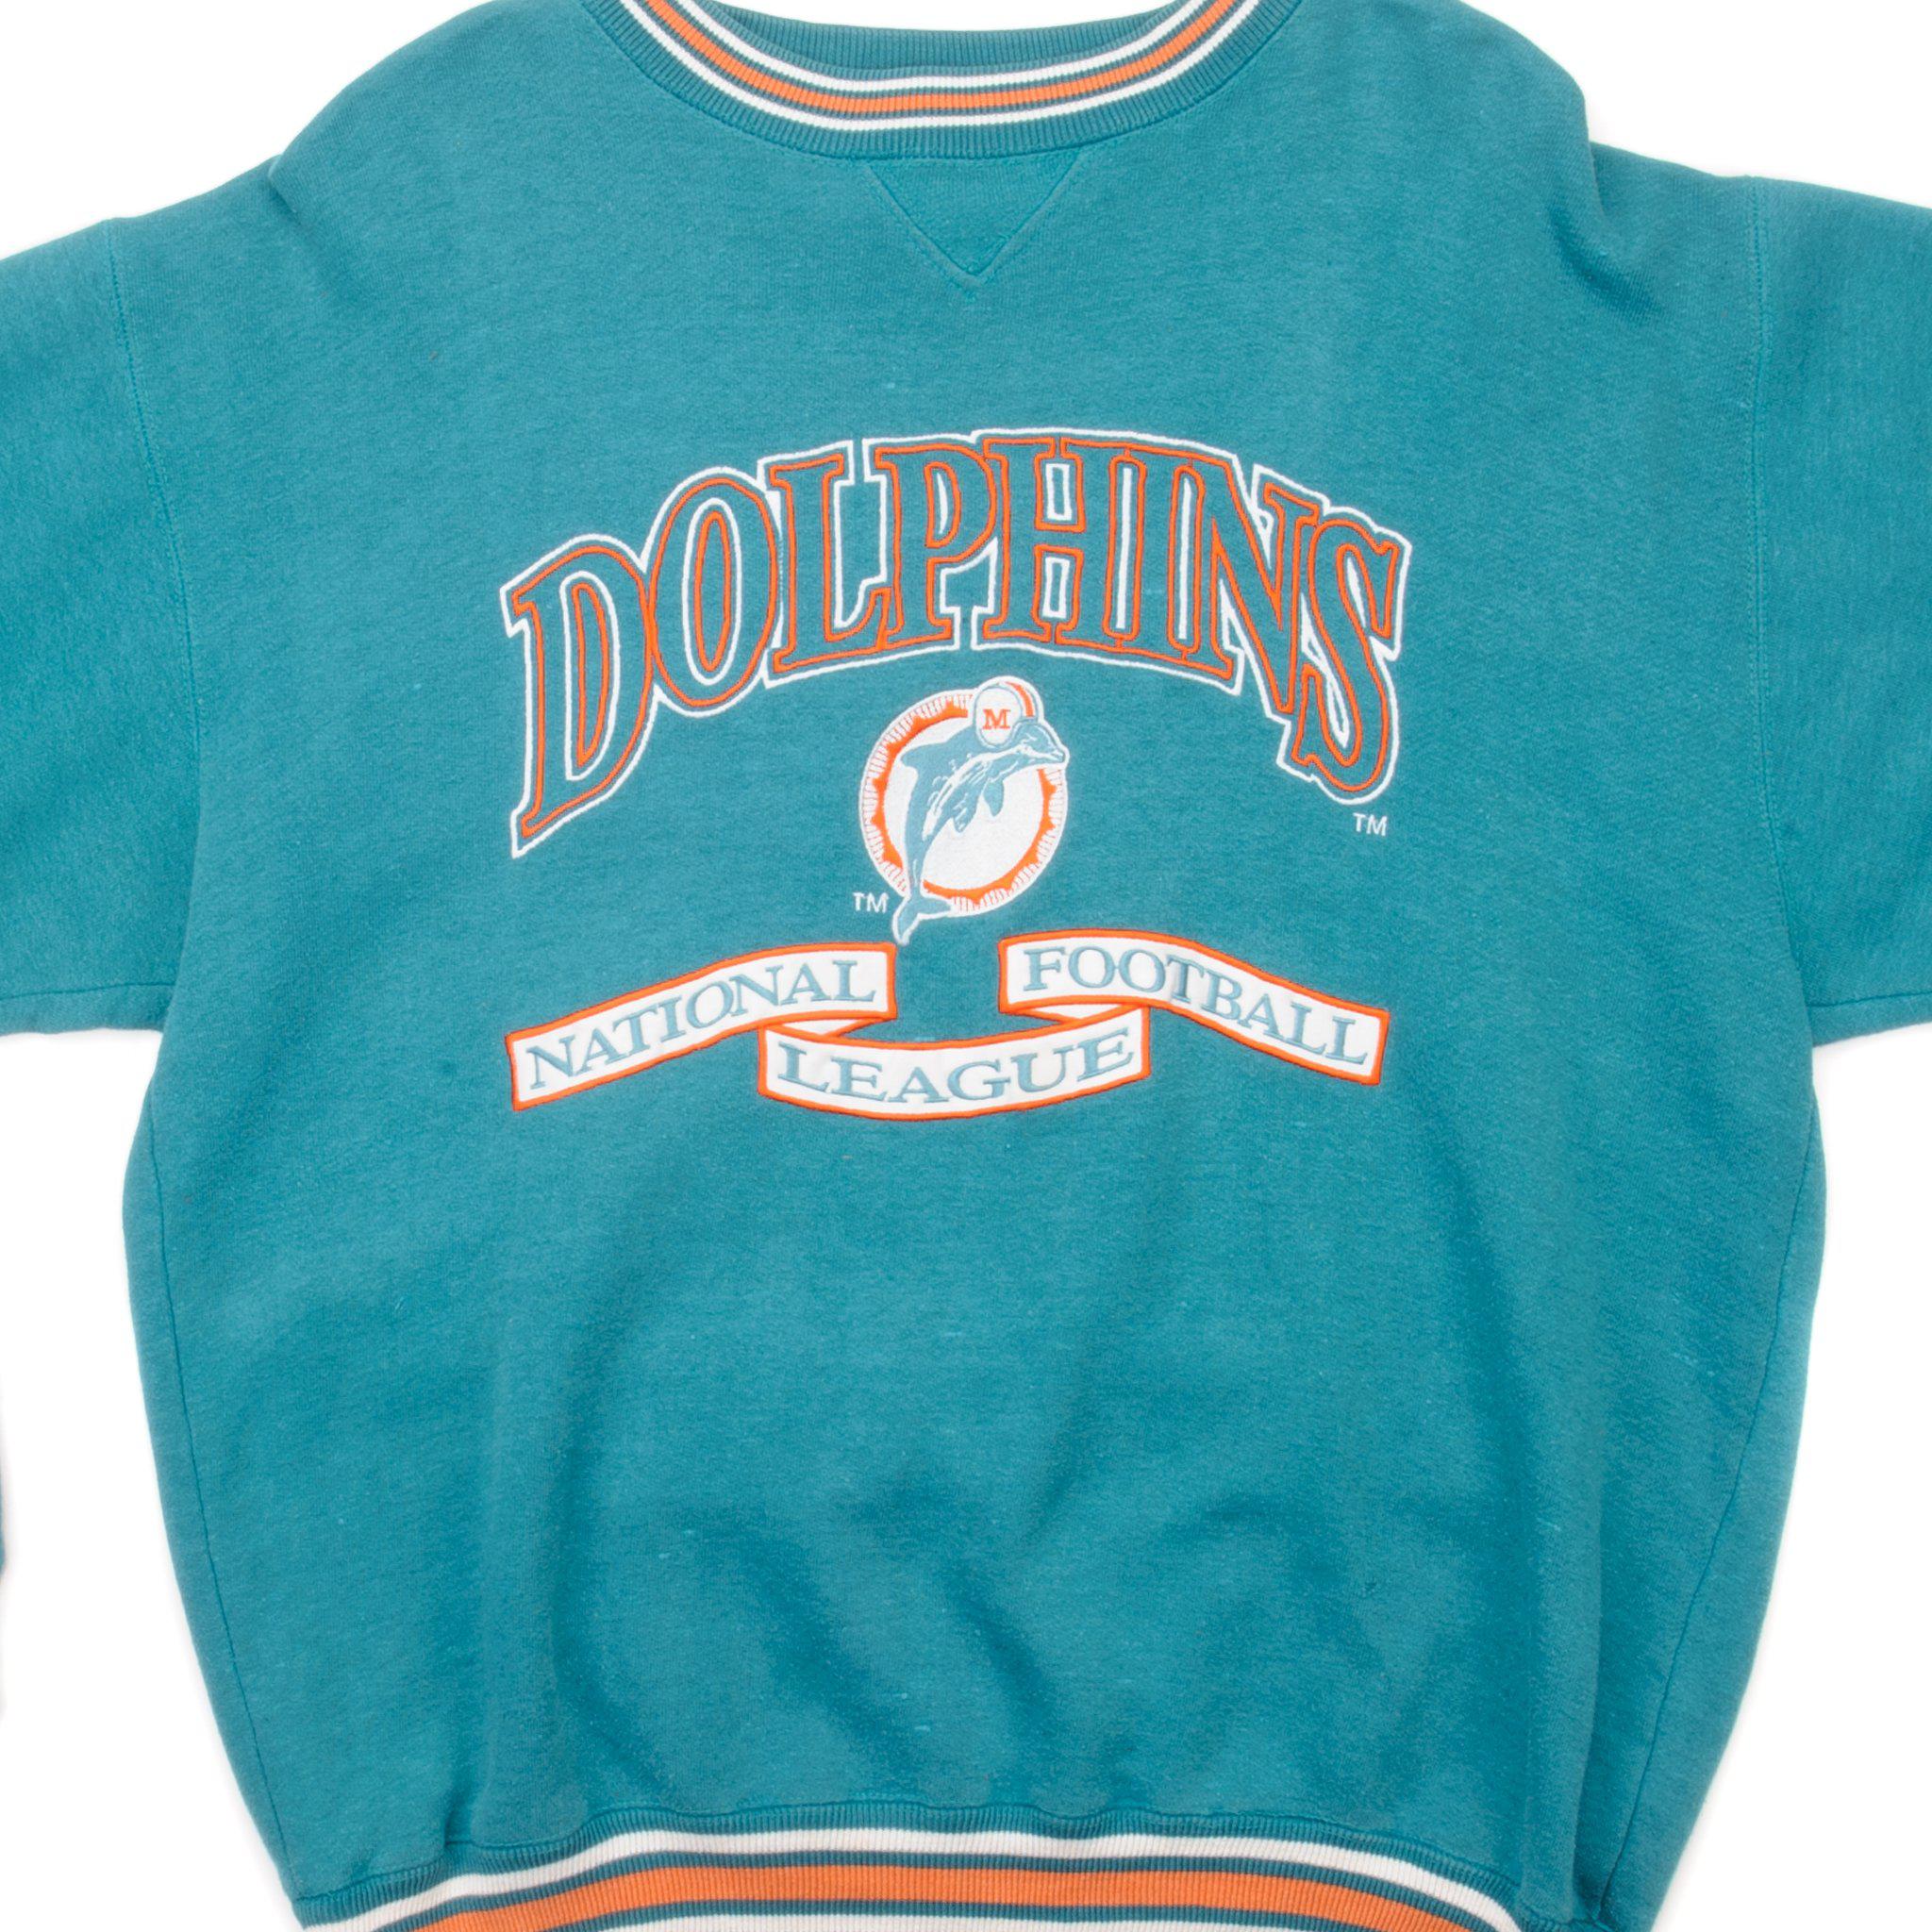 NFL Miami Dolphins Sweatshirt Size Large – Vintage rare